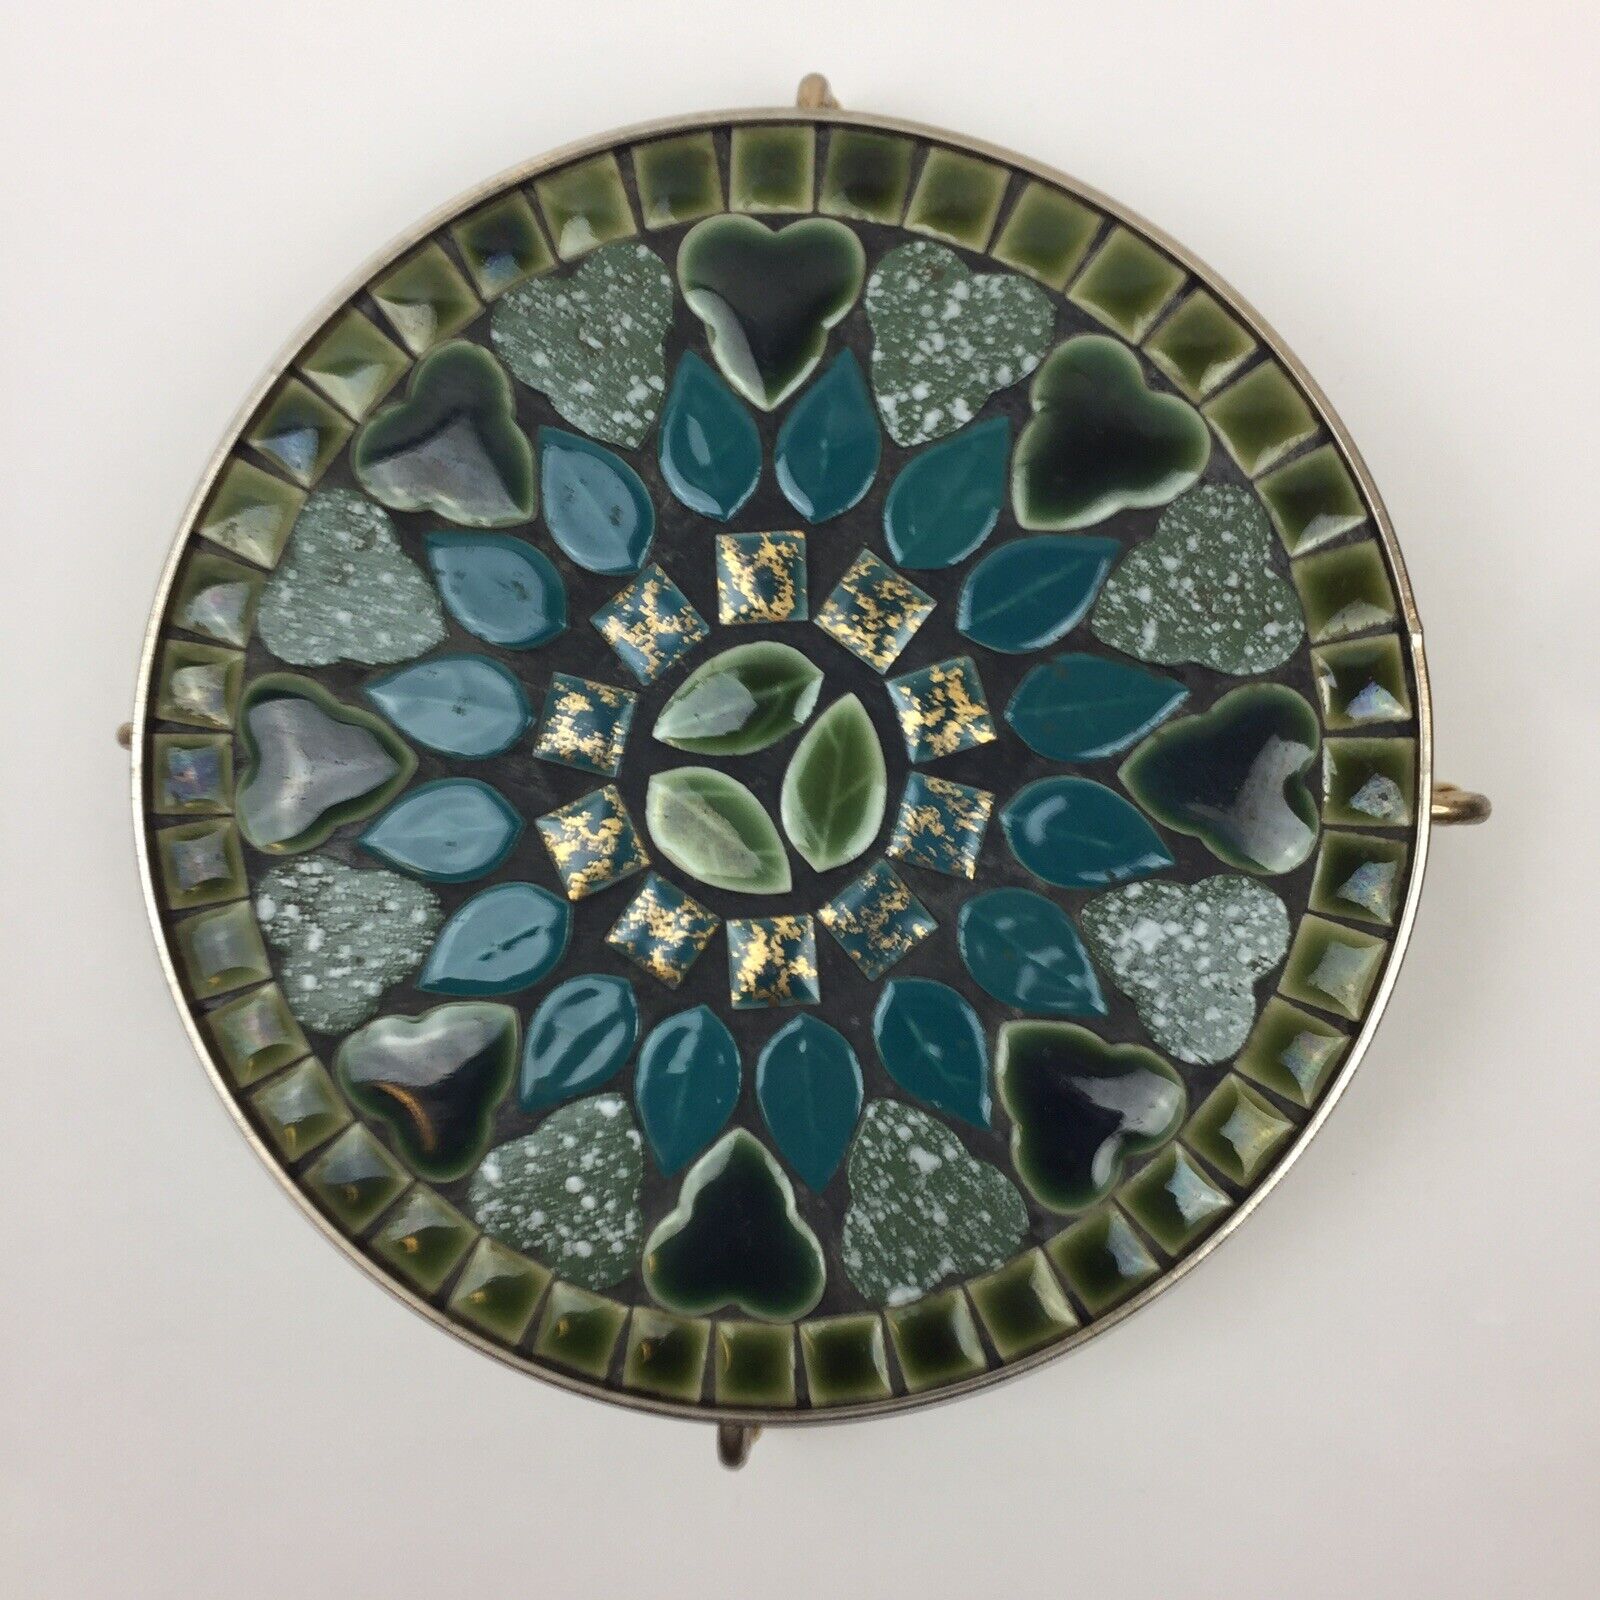 Vintage Mosaic Studio Lake Wales Florida Round Mosaic Trivet 6.25” Diameter Used